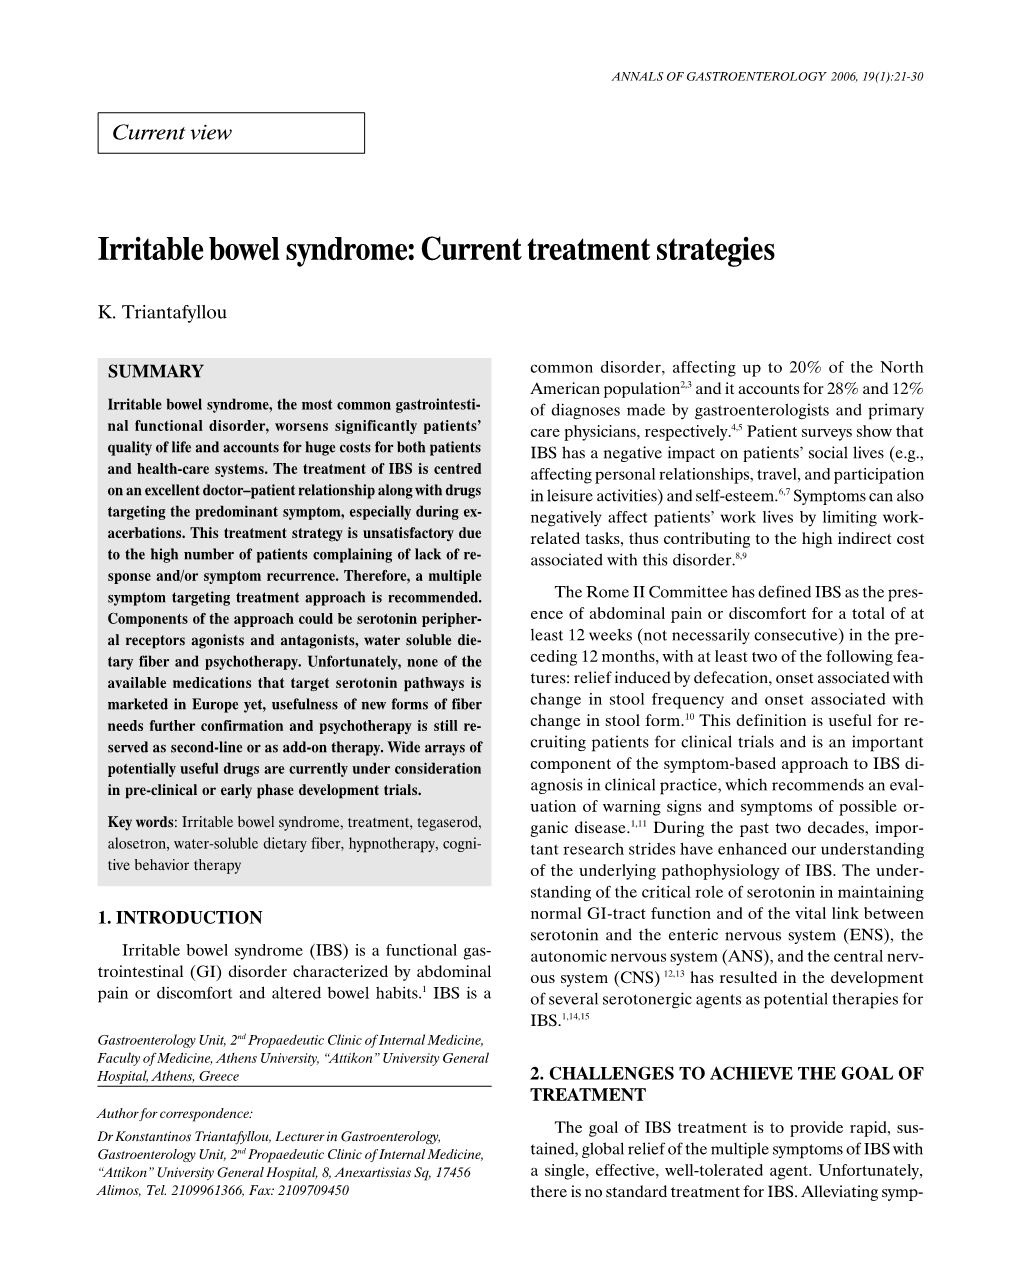 Irritable Bowel Syndrome: Current Treatment Strategies